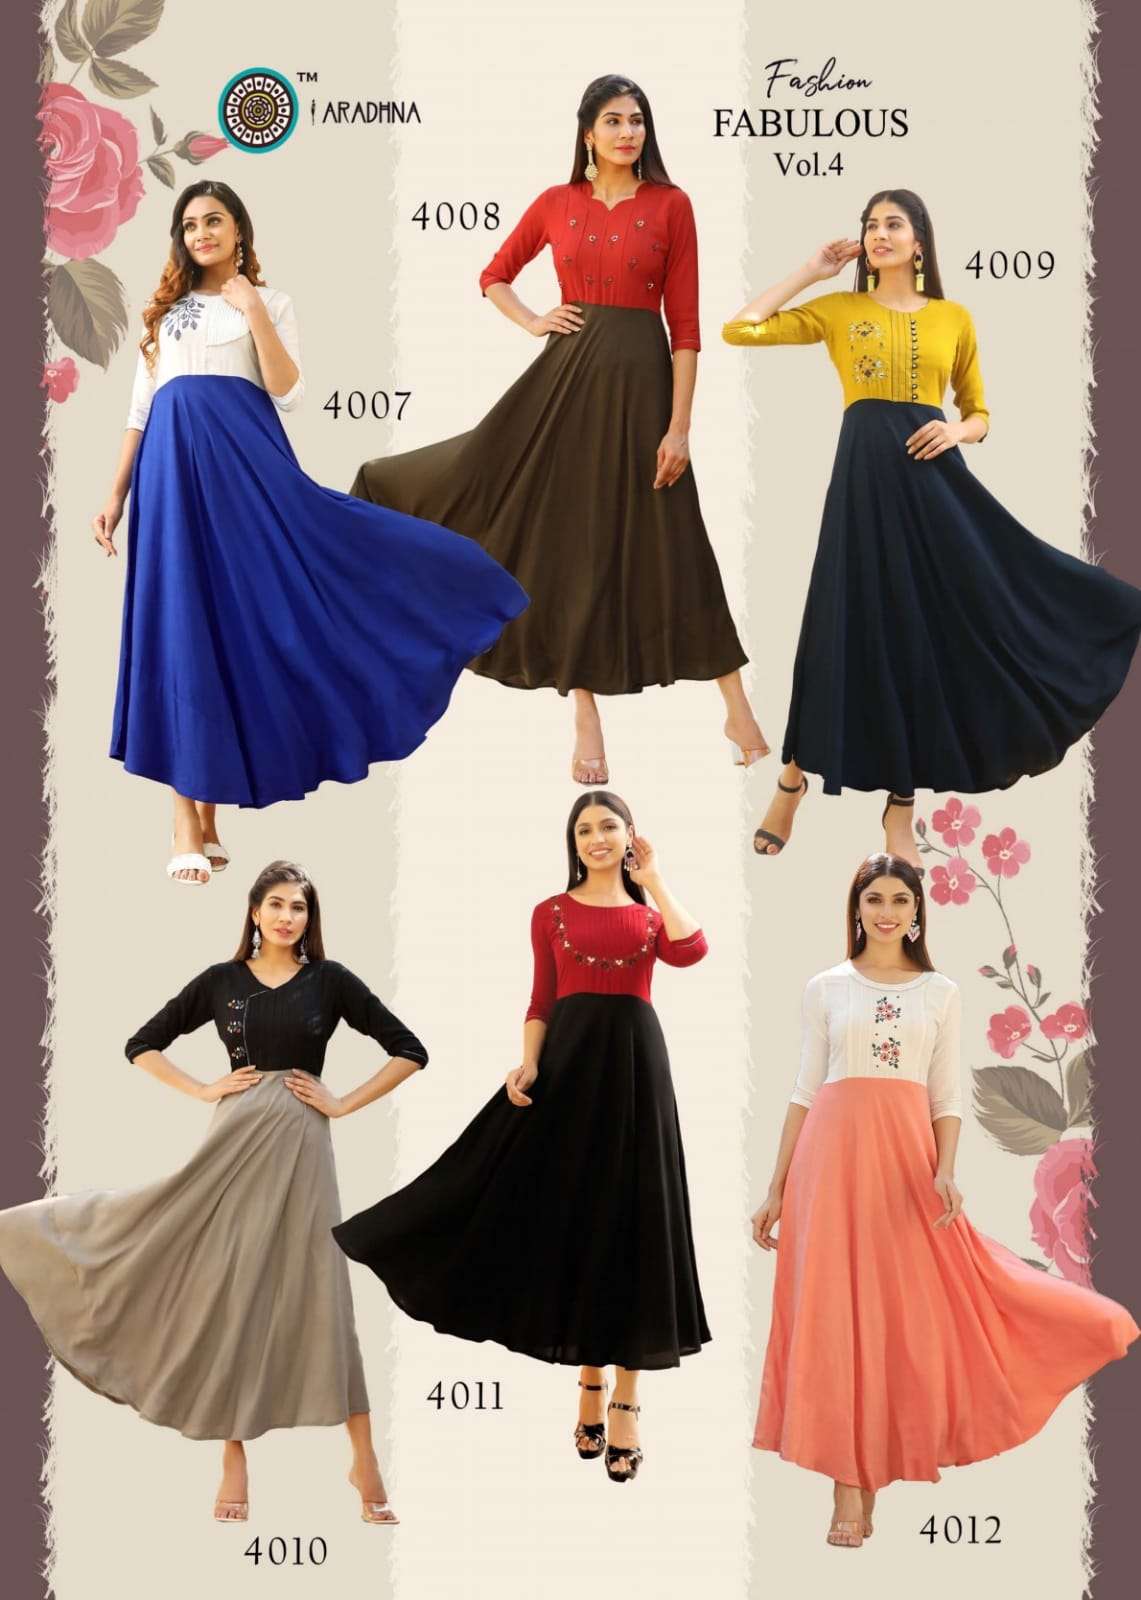 aradhana fashion fabulous vol 4 designer flair kurtis catalogue surat